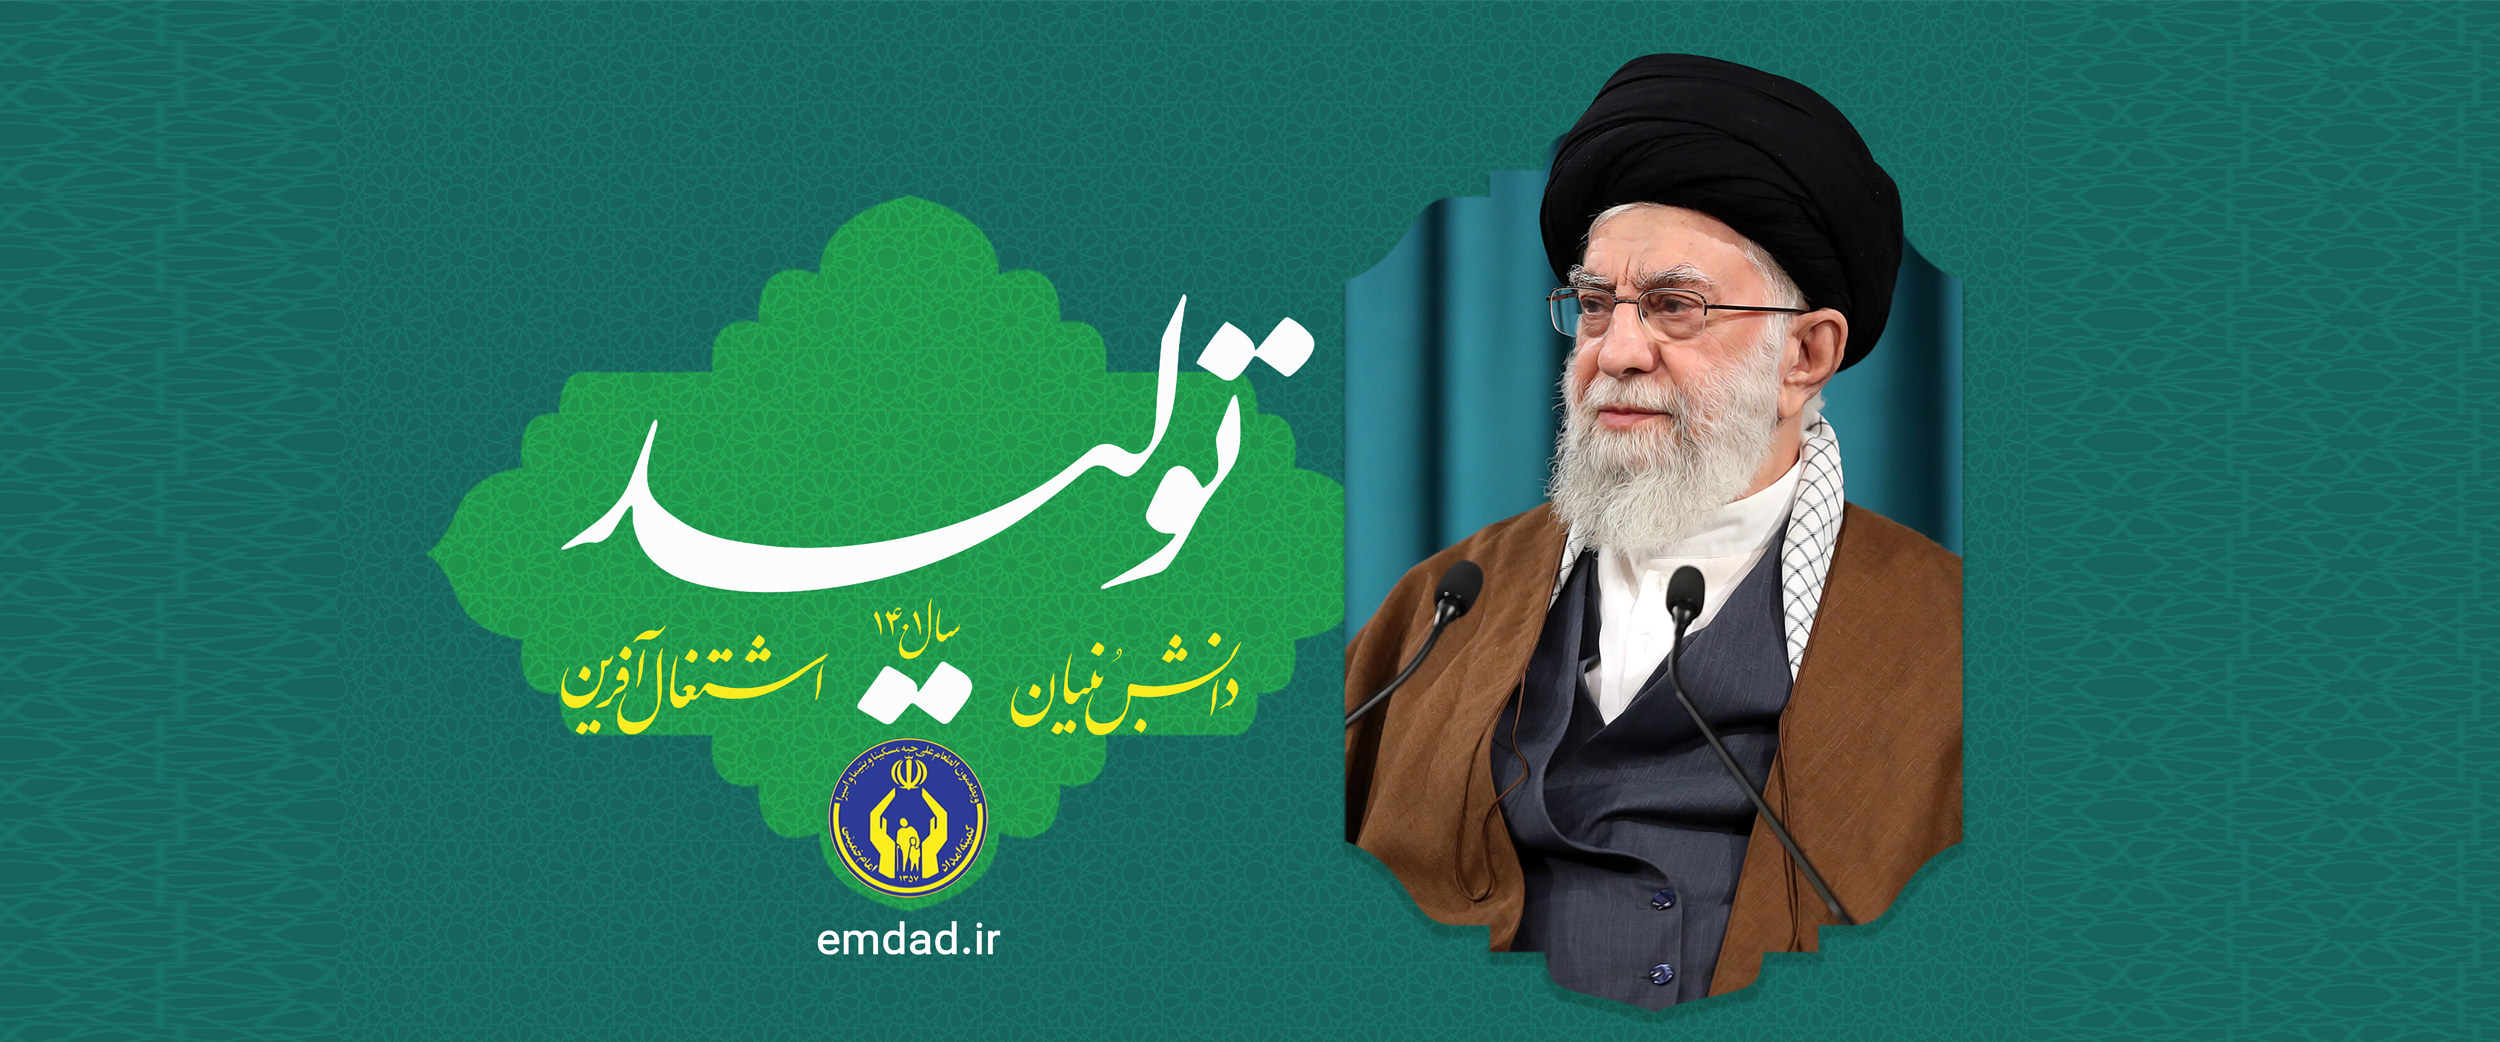 شعار سال - کمیته امداد امام خمینی (ره)